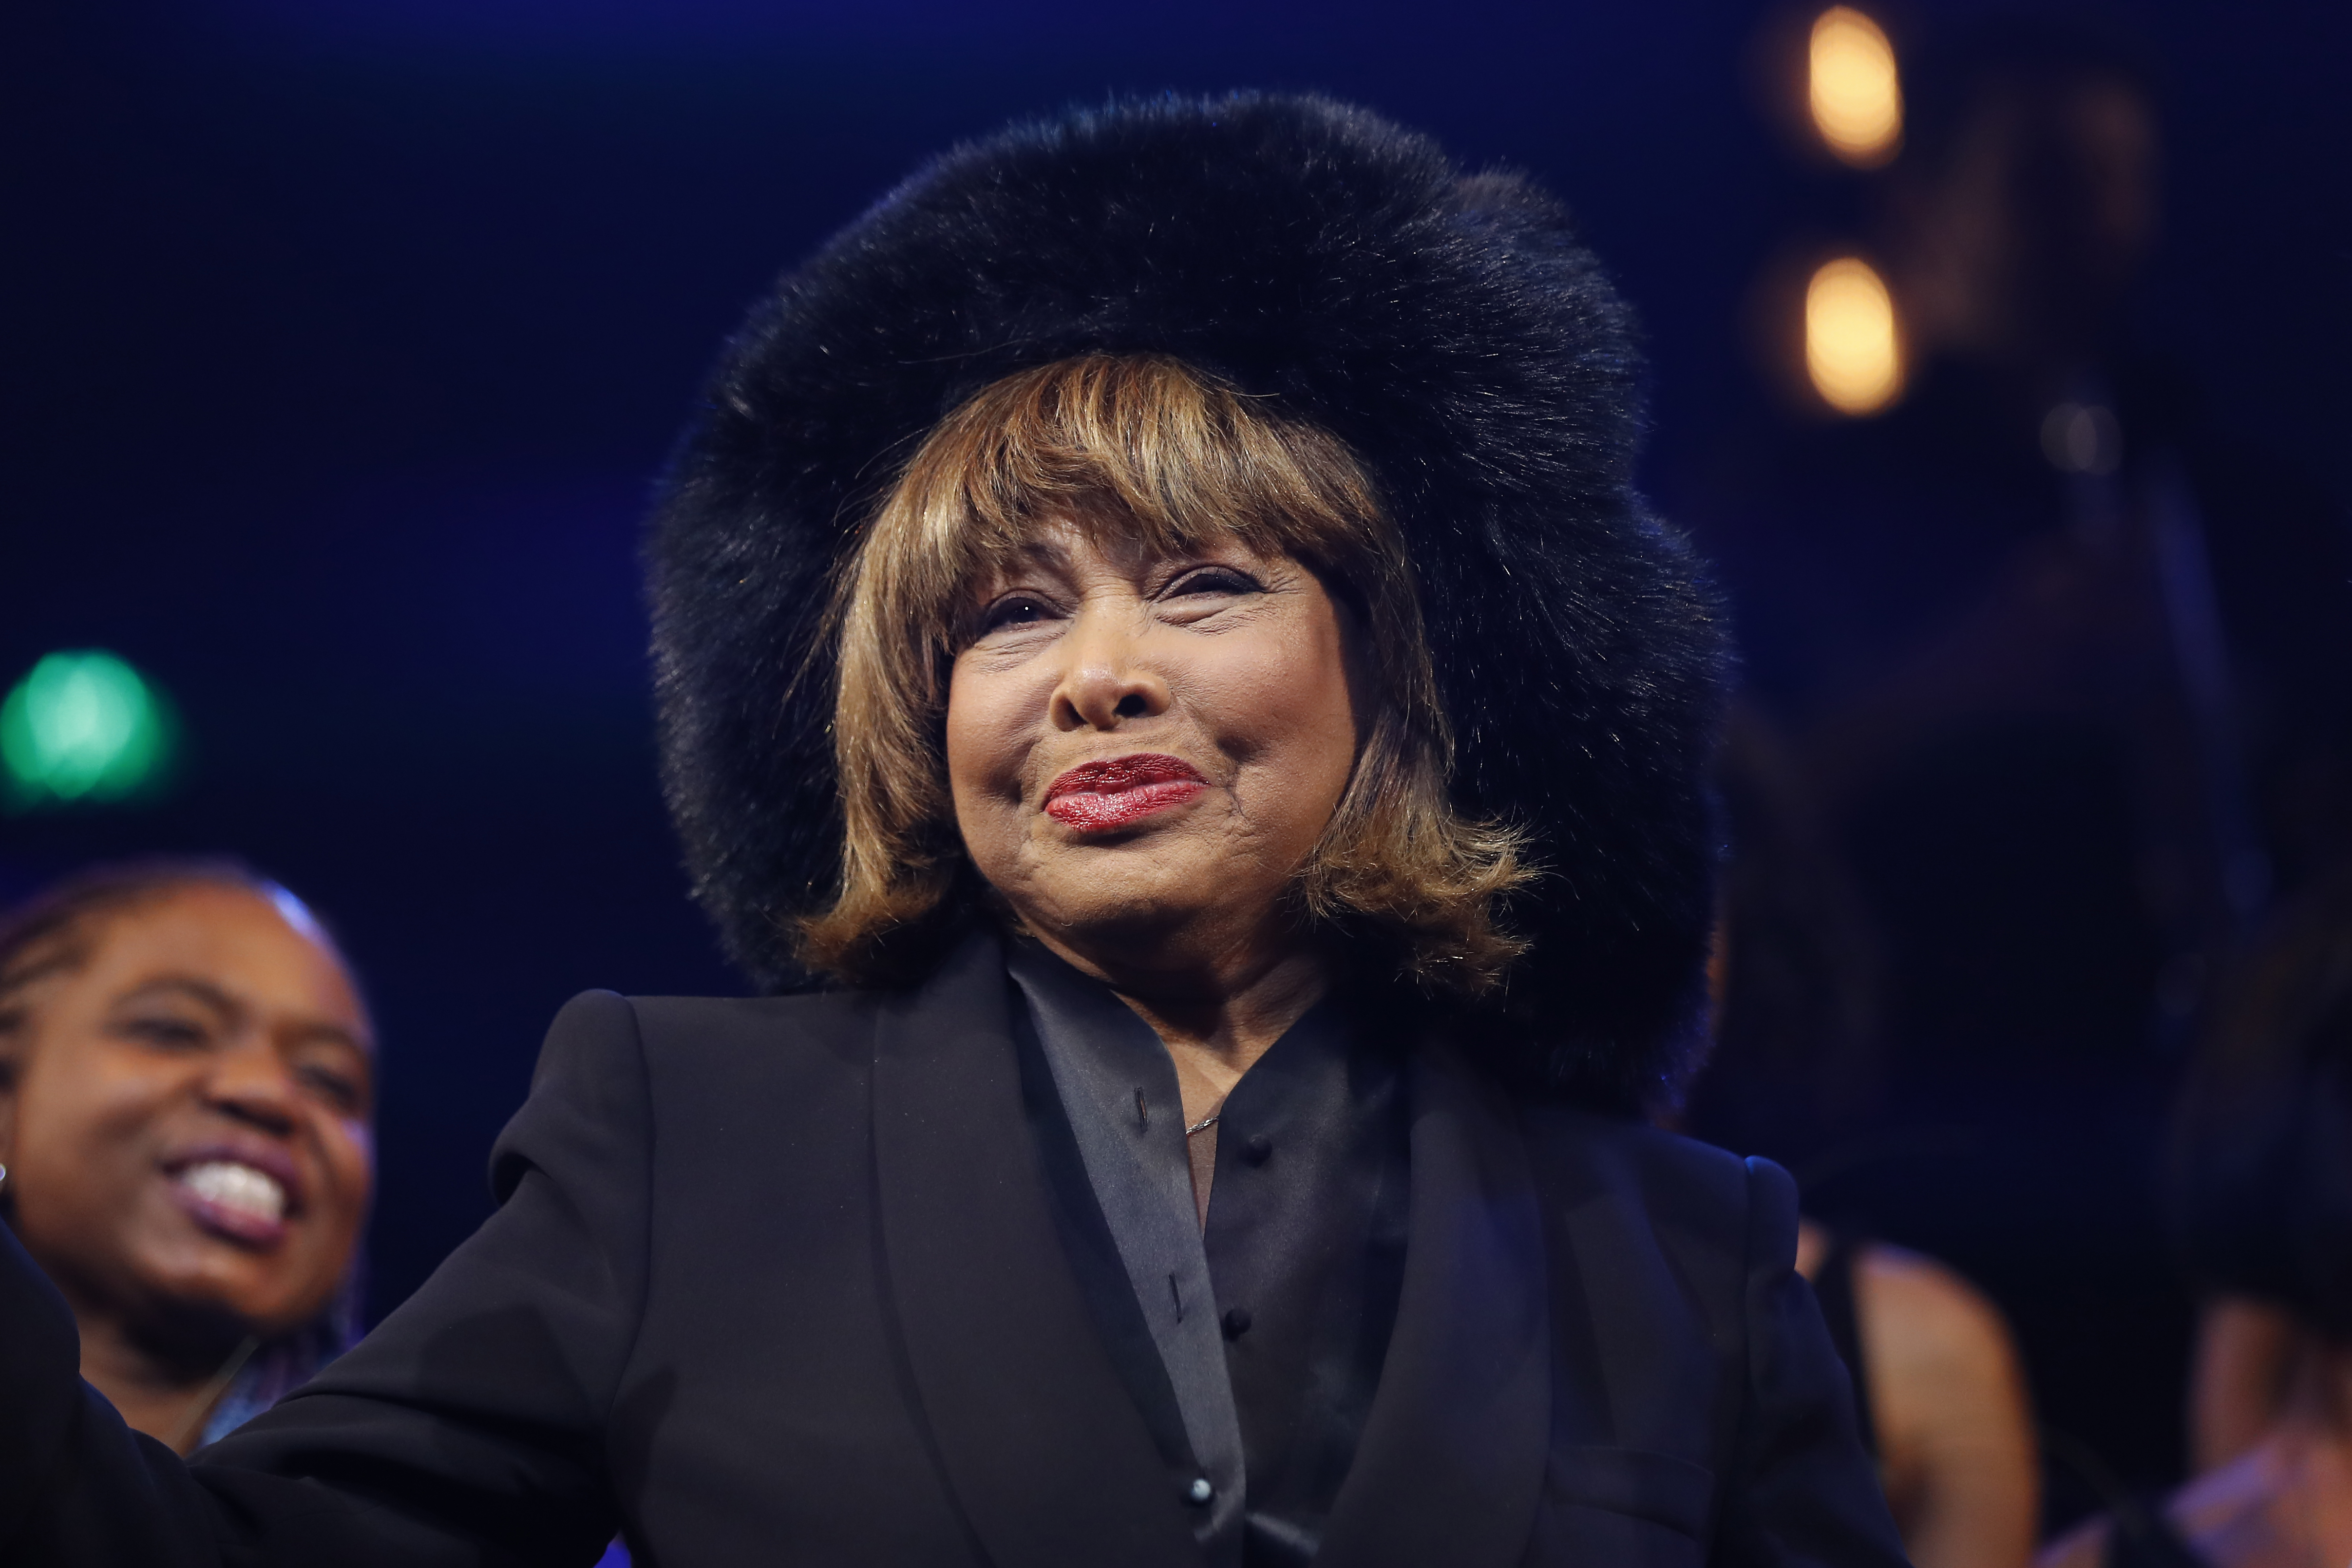 Tina Turner lors de la première musicale de "Tina - Das Tina Turner Musical" à Hambourg, 2019. | Source : Getty Images